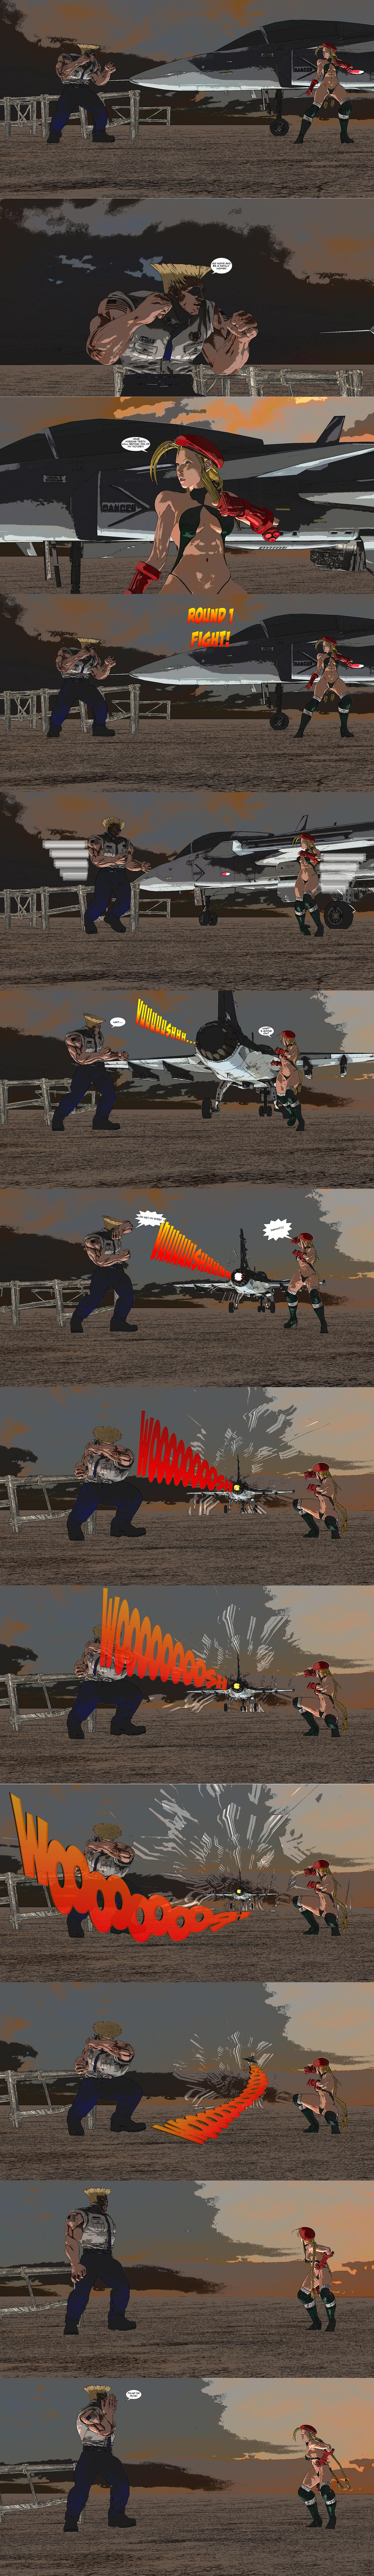 Street Fighter TAS - Cammy Kisses Guile by akuma319 on DeviantArt